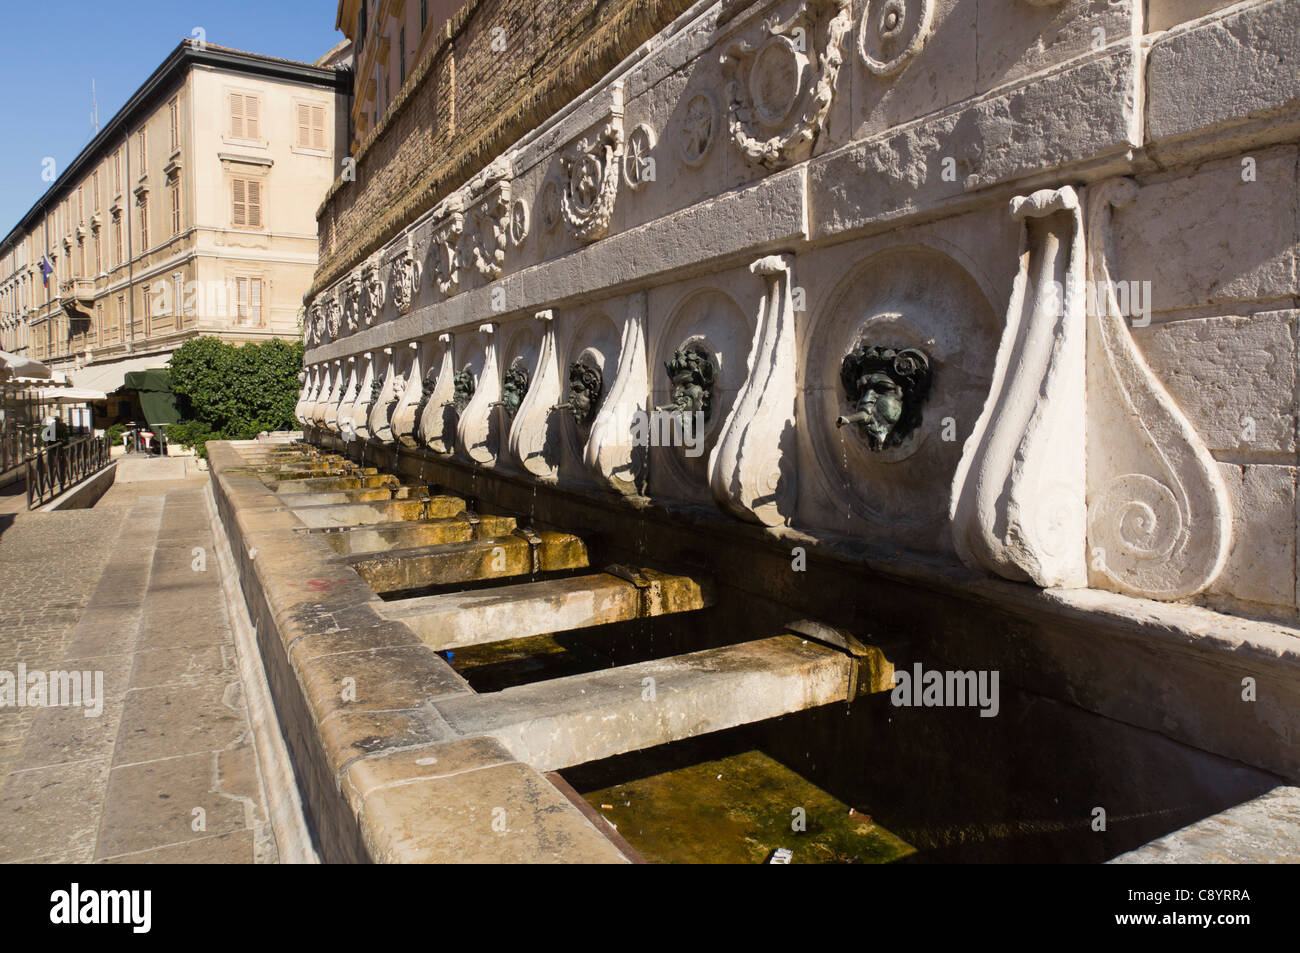 Ancona Italy - Fontana del Calamo, XIV century, attr Pellegrino Tibaldi. For horse watering. Bronze satyr head spouts. Stock Photo